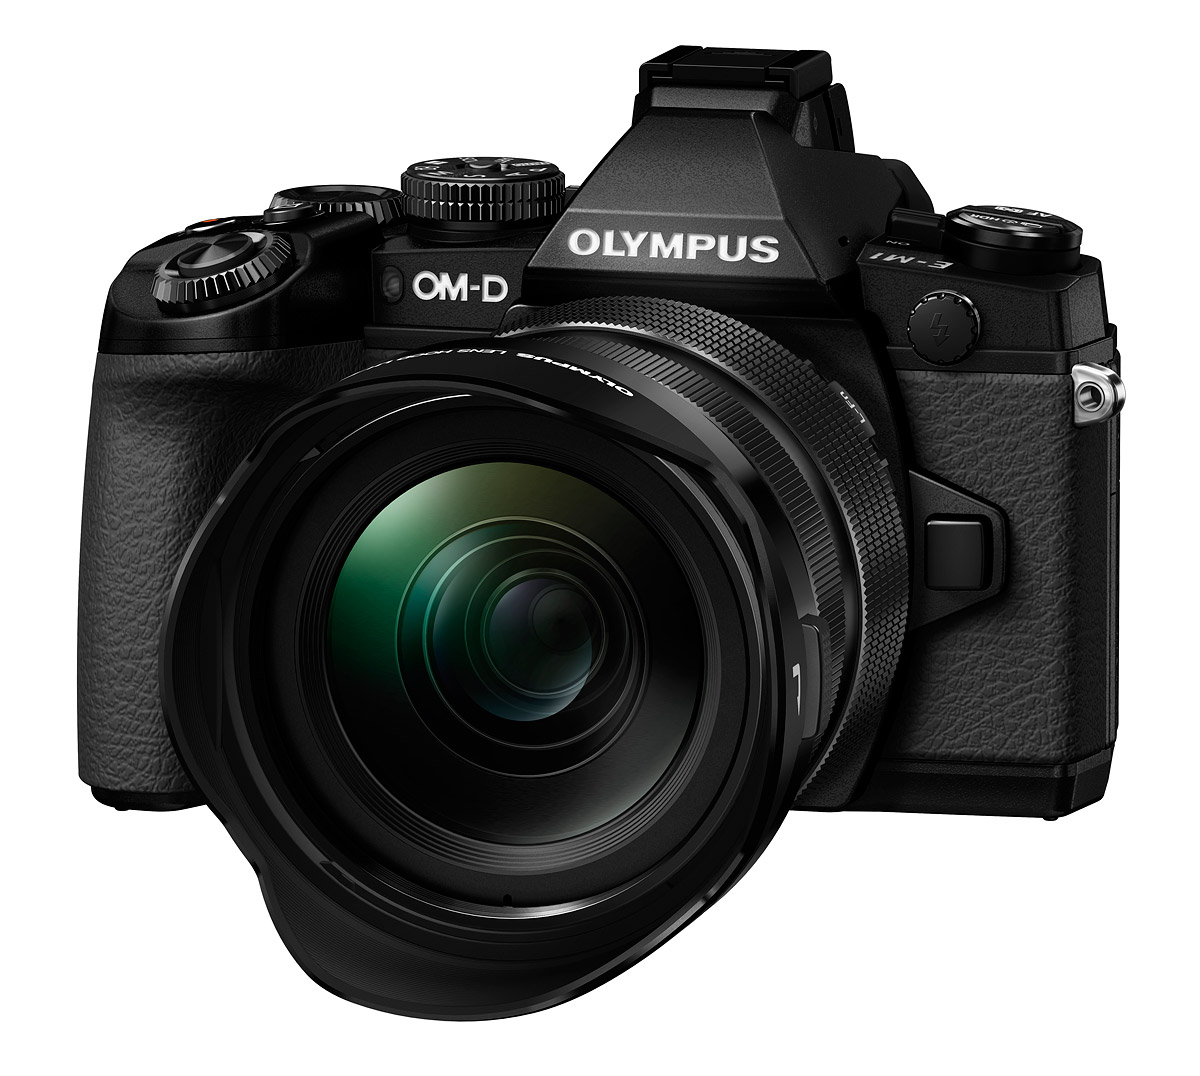 Kreek Bakken Stroomopwaarts Hands-On at the Olympus OM-D EM-1 Camera Launch • Camera News and Reviews